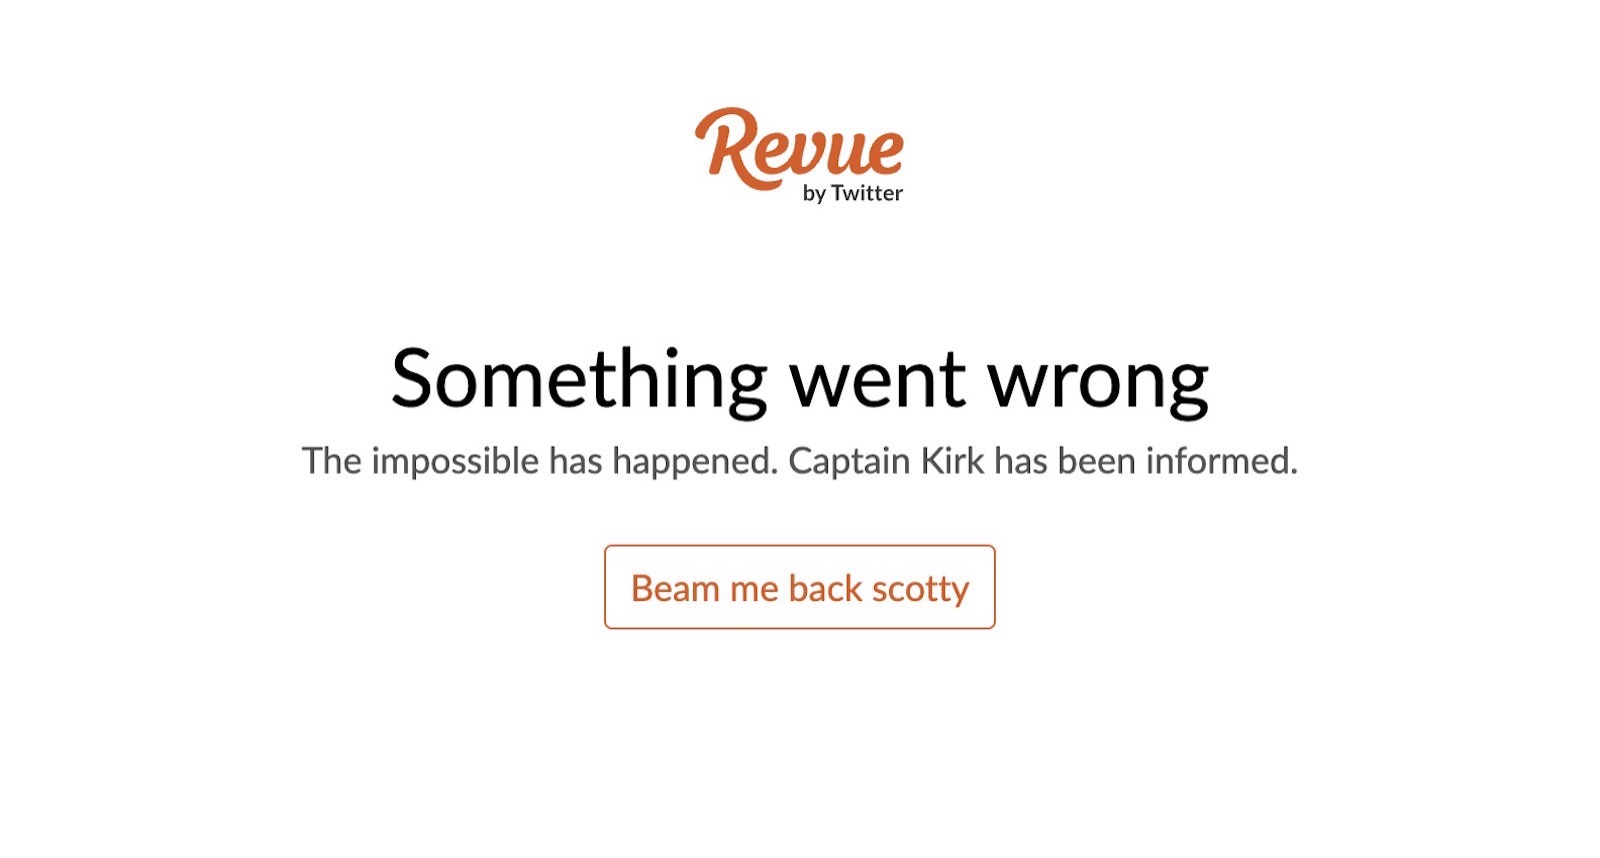 Revue-Something-went-wrong.jpg